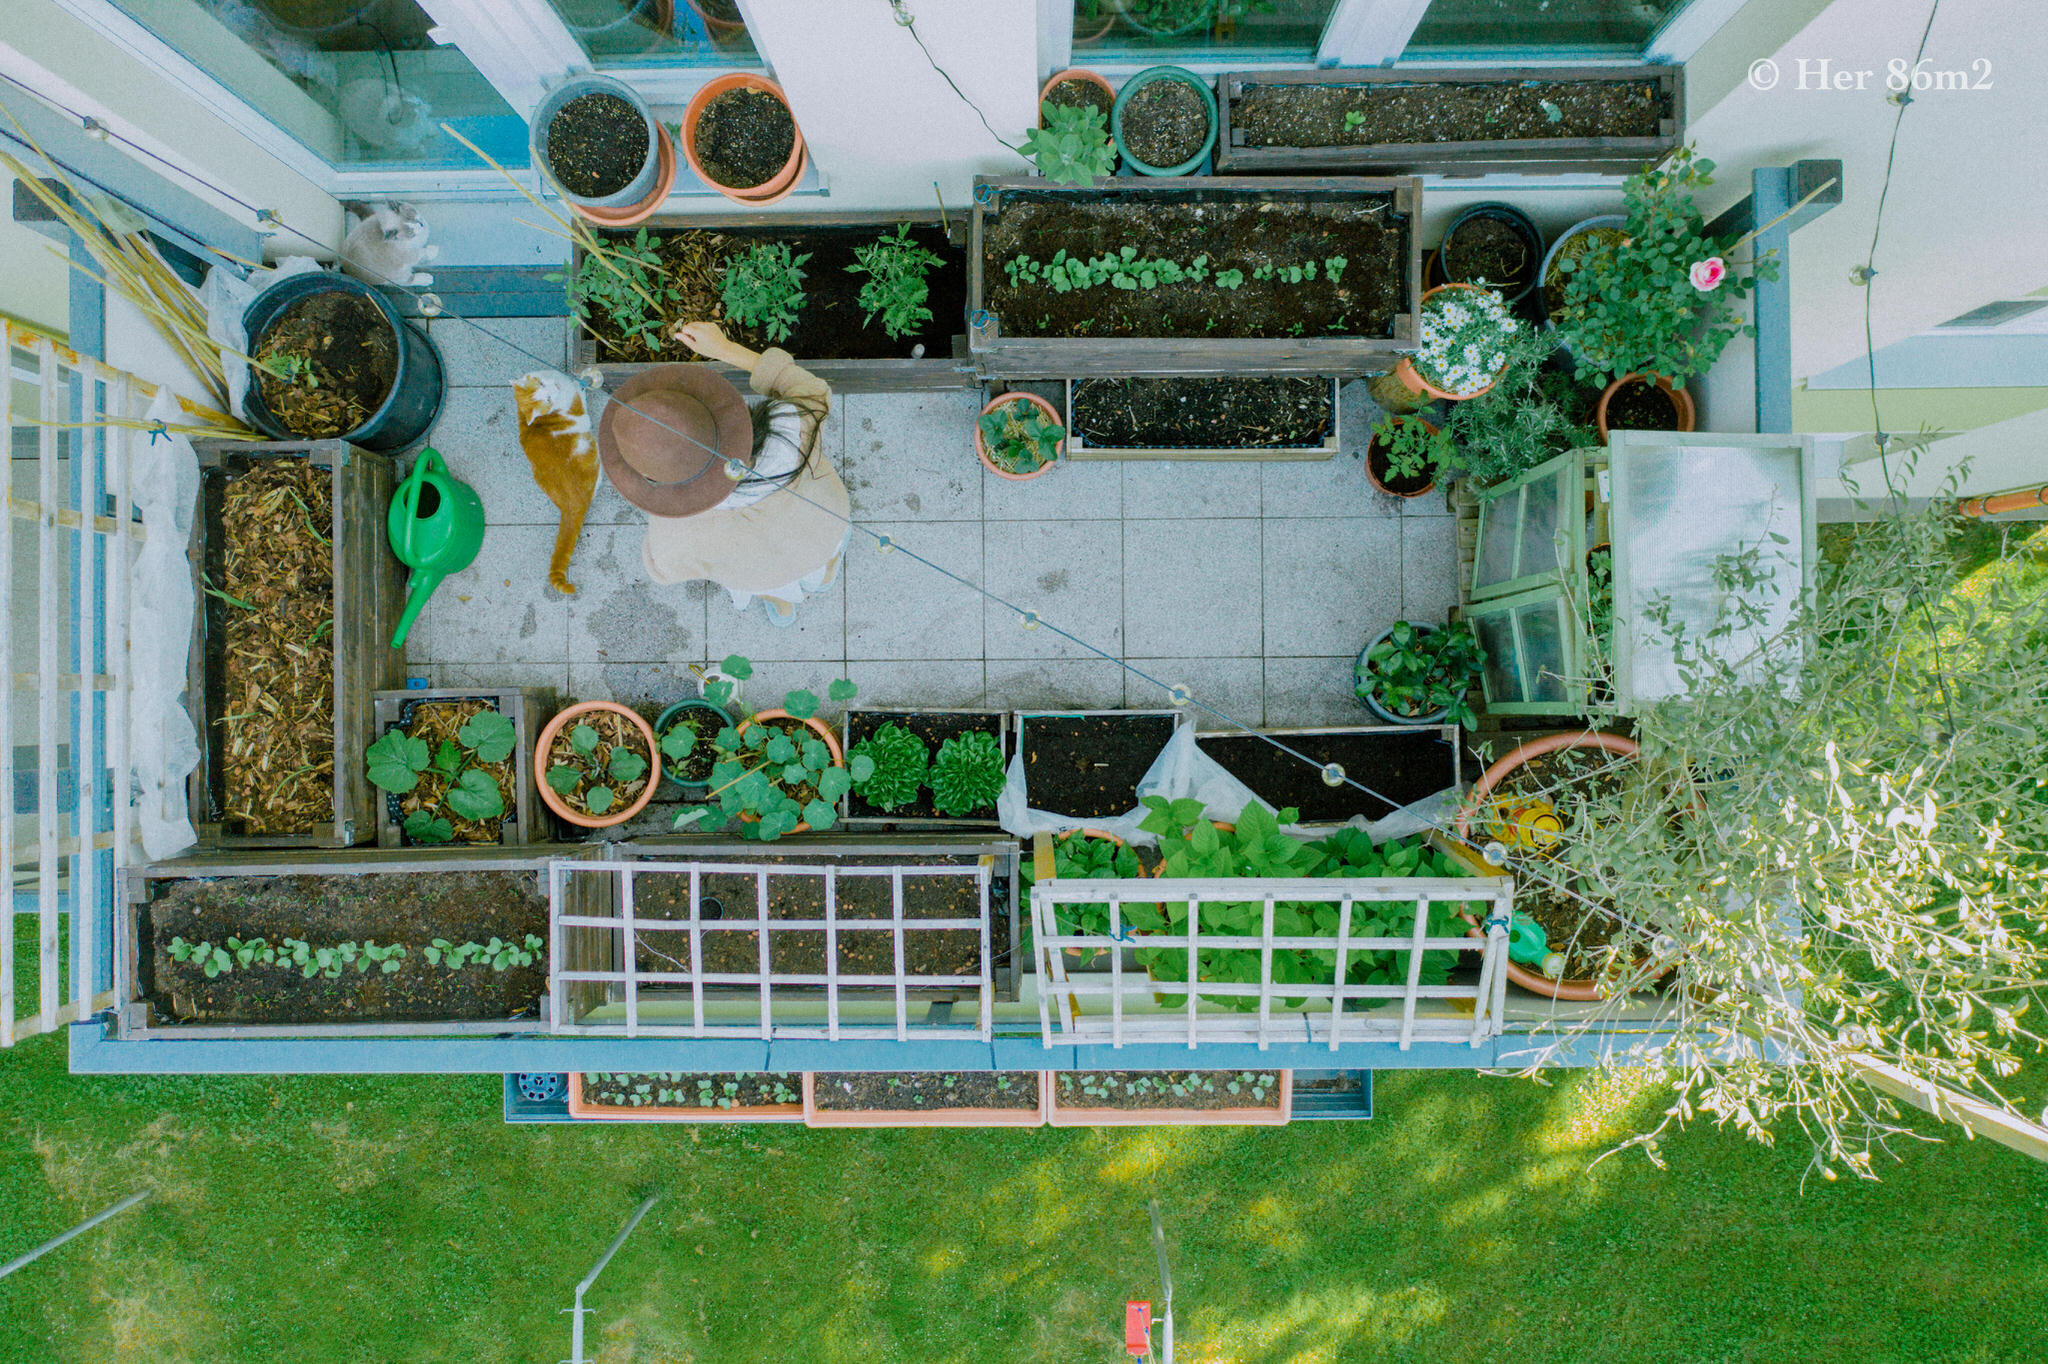 Her 86m2 - My 8m² Balcony Vegetable Garden | A Wonderful 200 Day Journey 26a.jpg